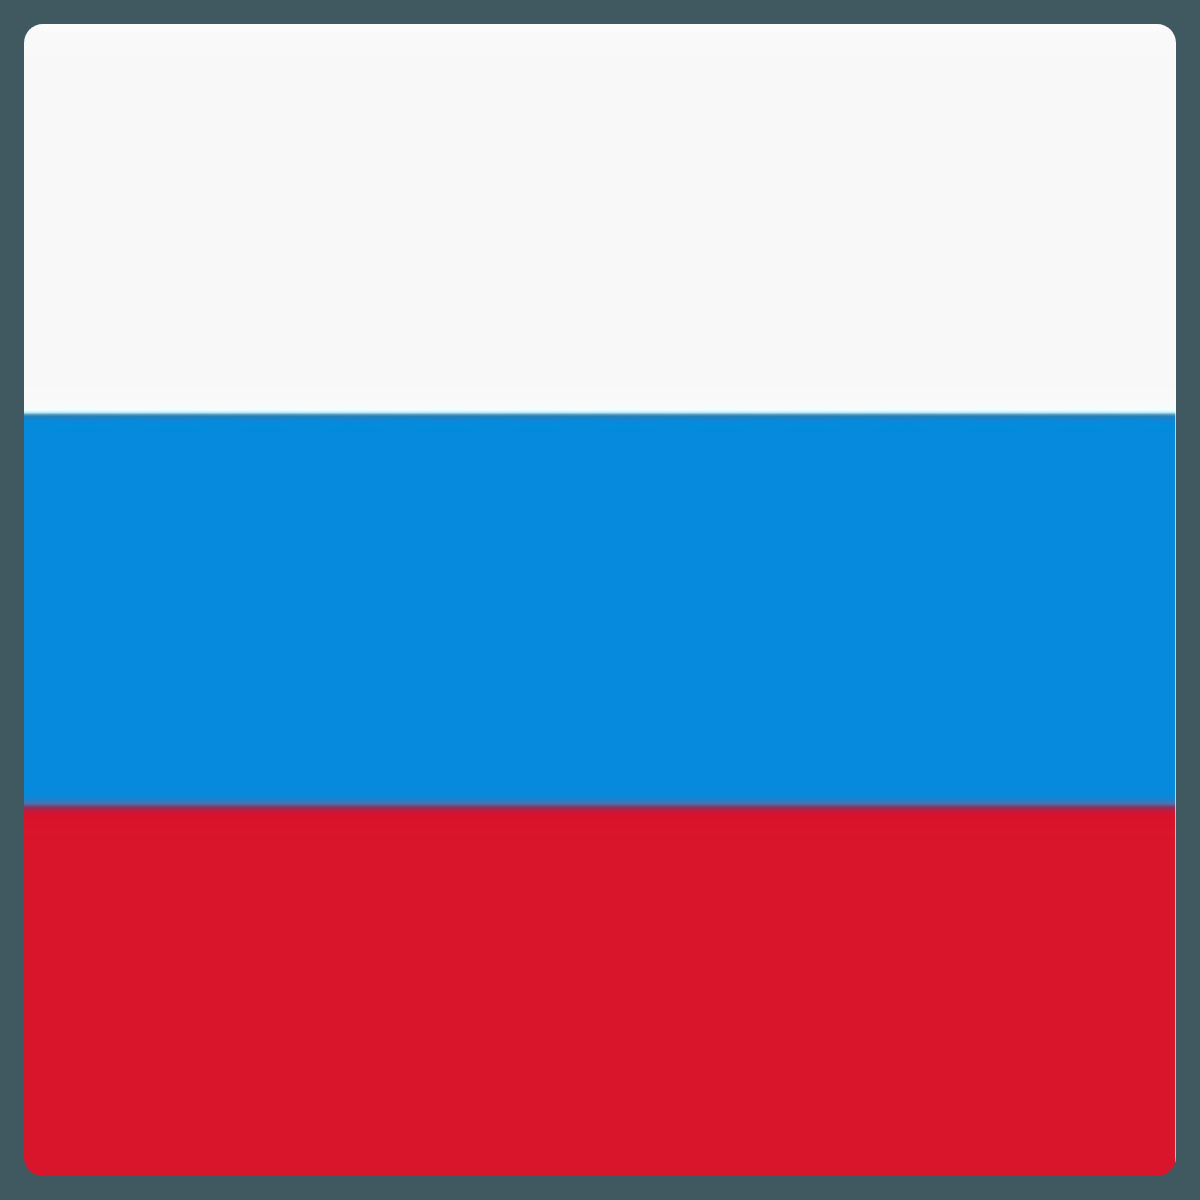 Флаг РФ 1991-1993. Бело лазорево алый флаг России. Бело-лазорево-красный флаг. Бело лазорево алый флаг. Бело лазоревый